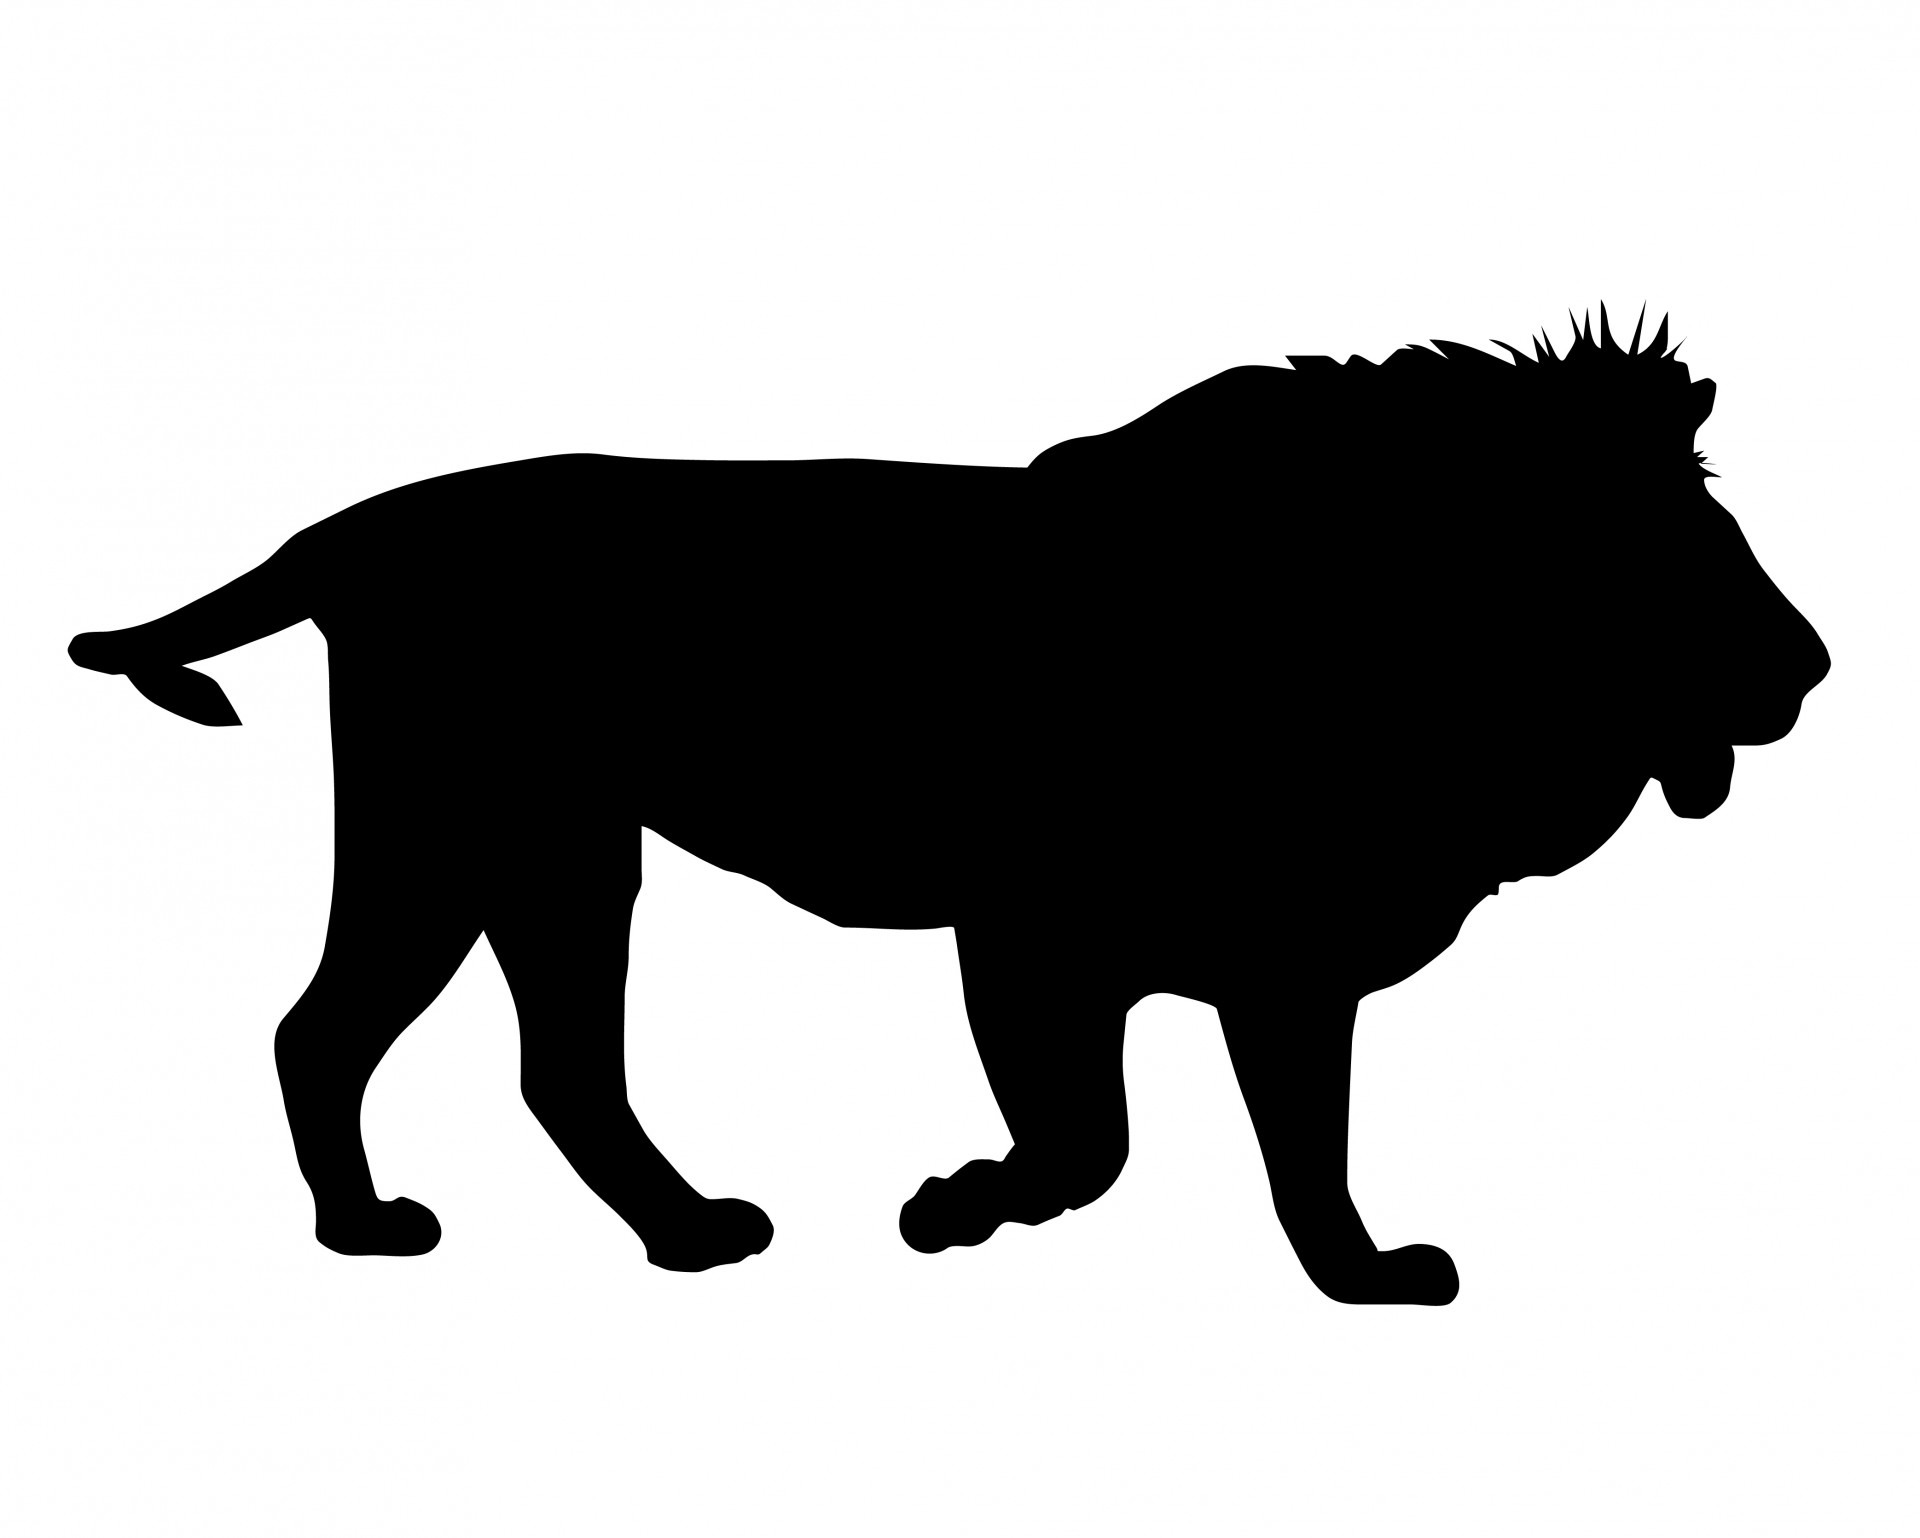 Black lion silhouette.